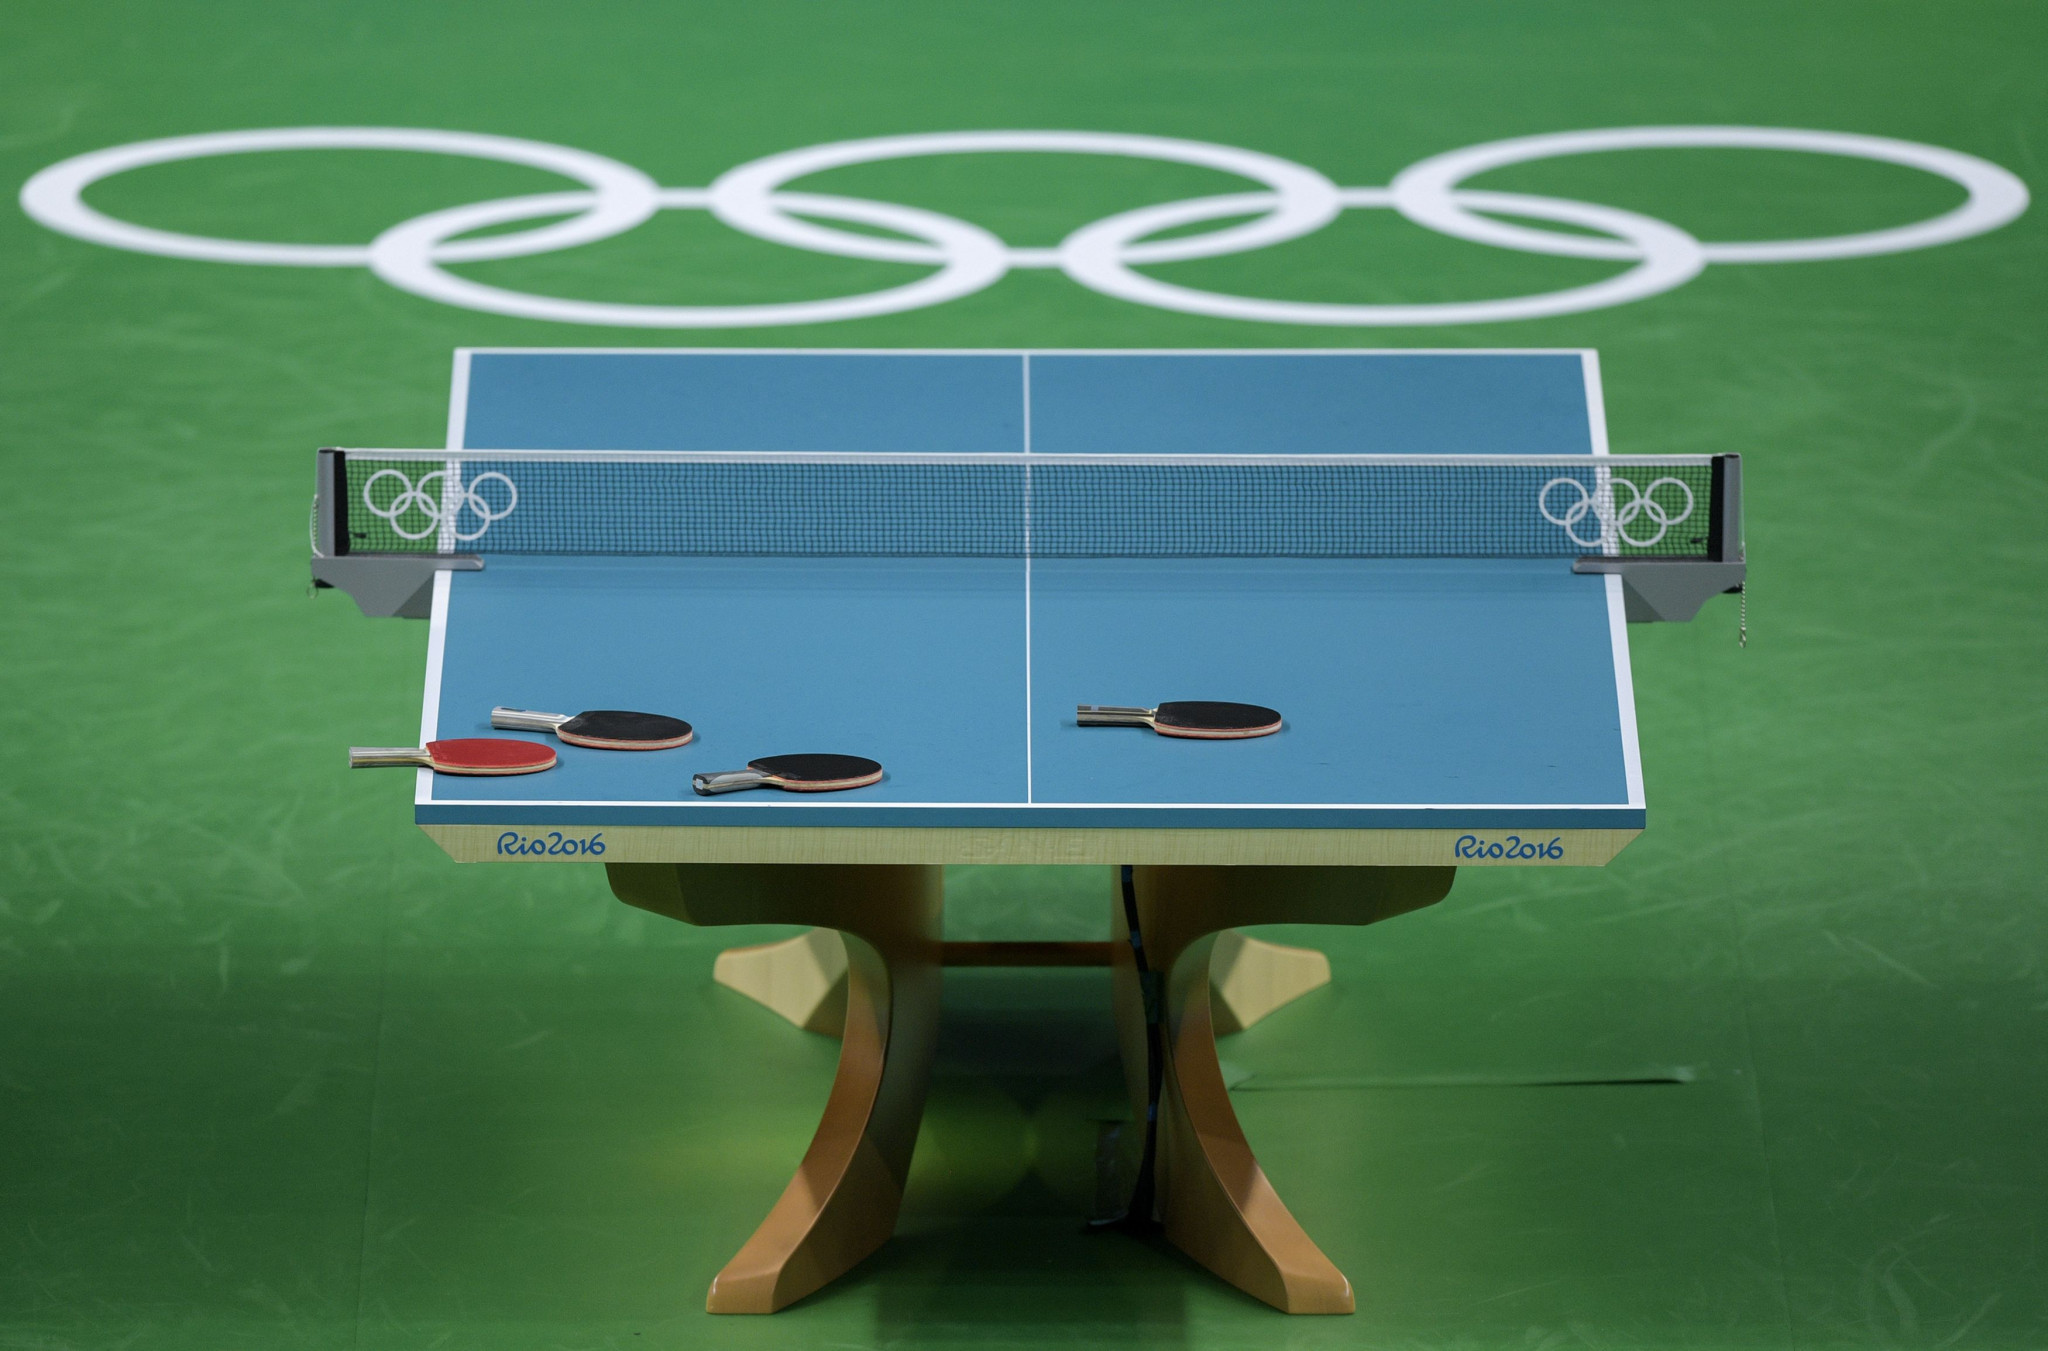 Ping pong olympics